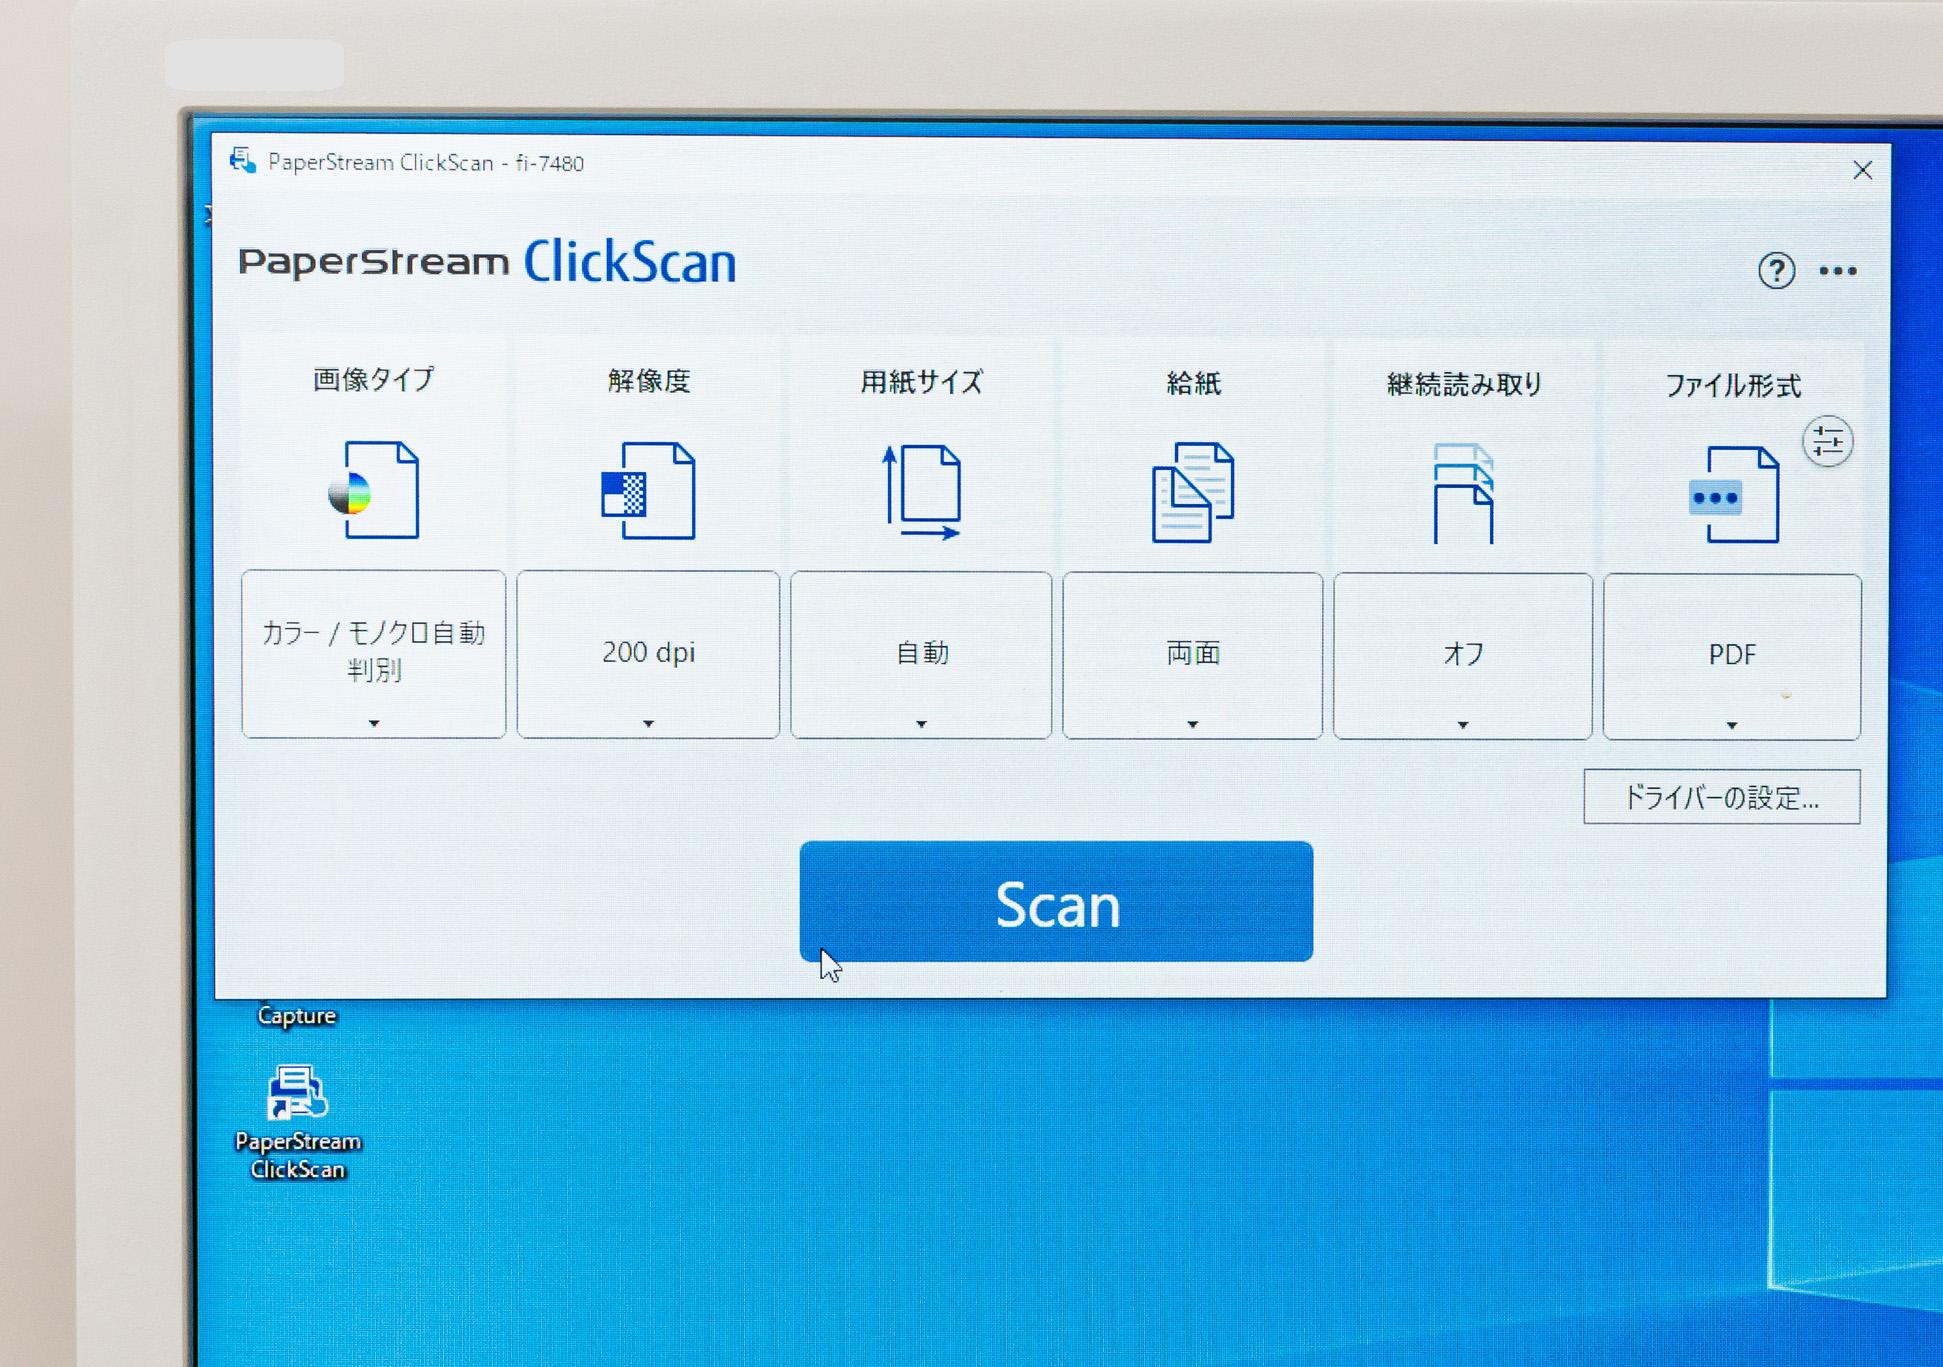 「PaperStream ClickScan」の画面